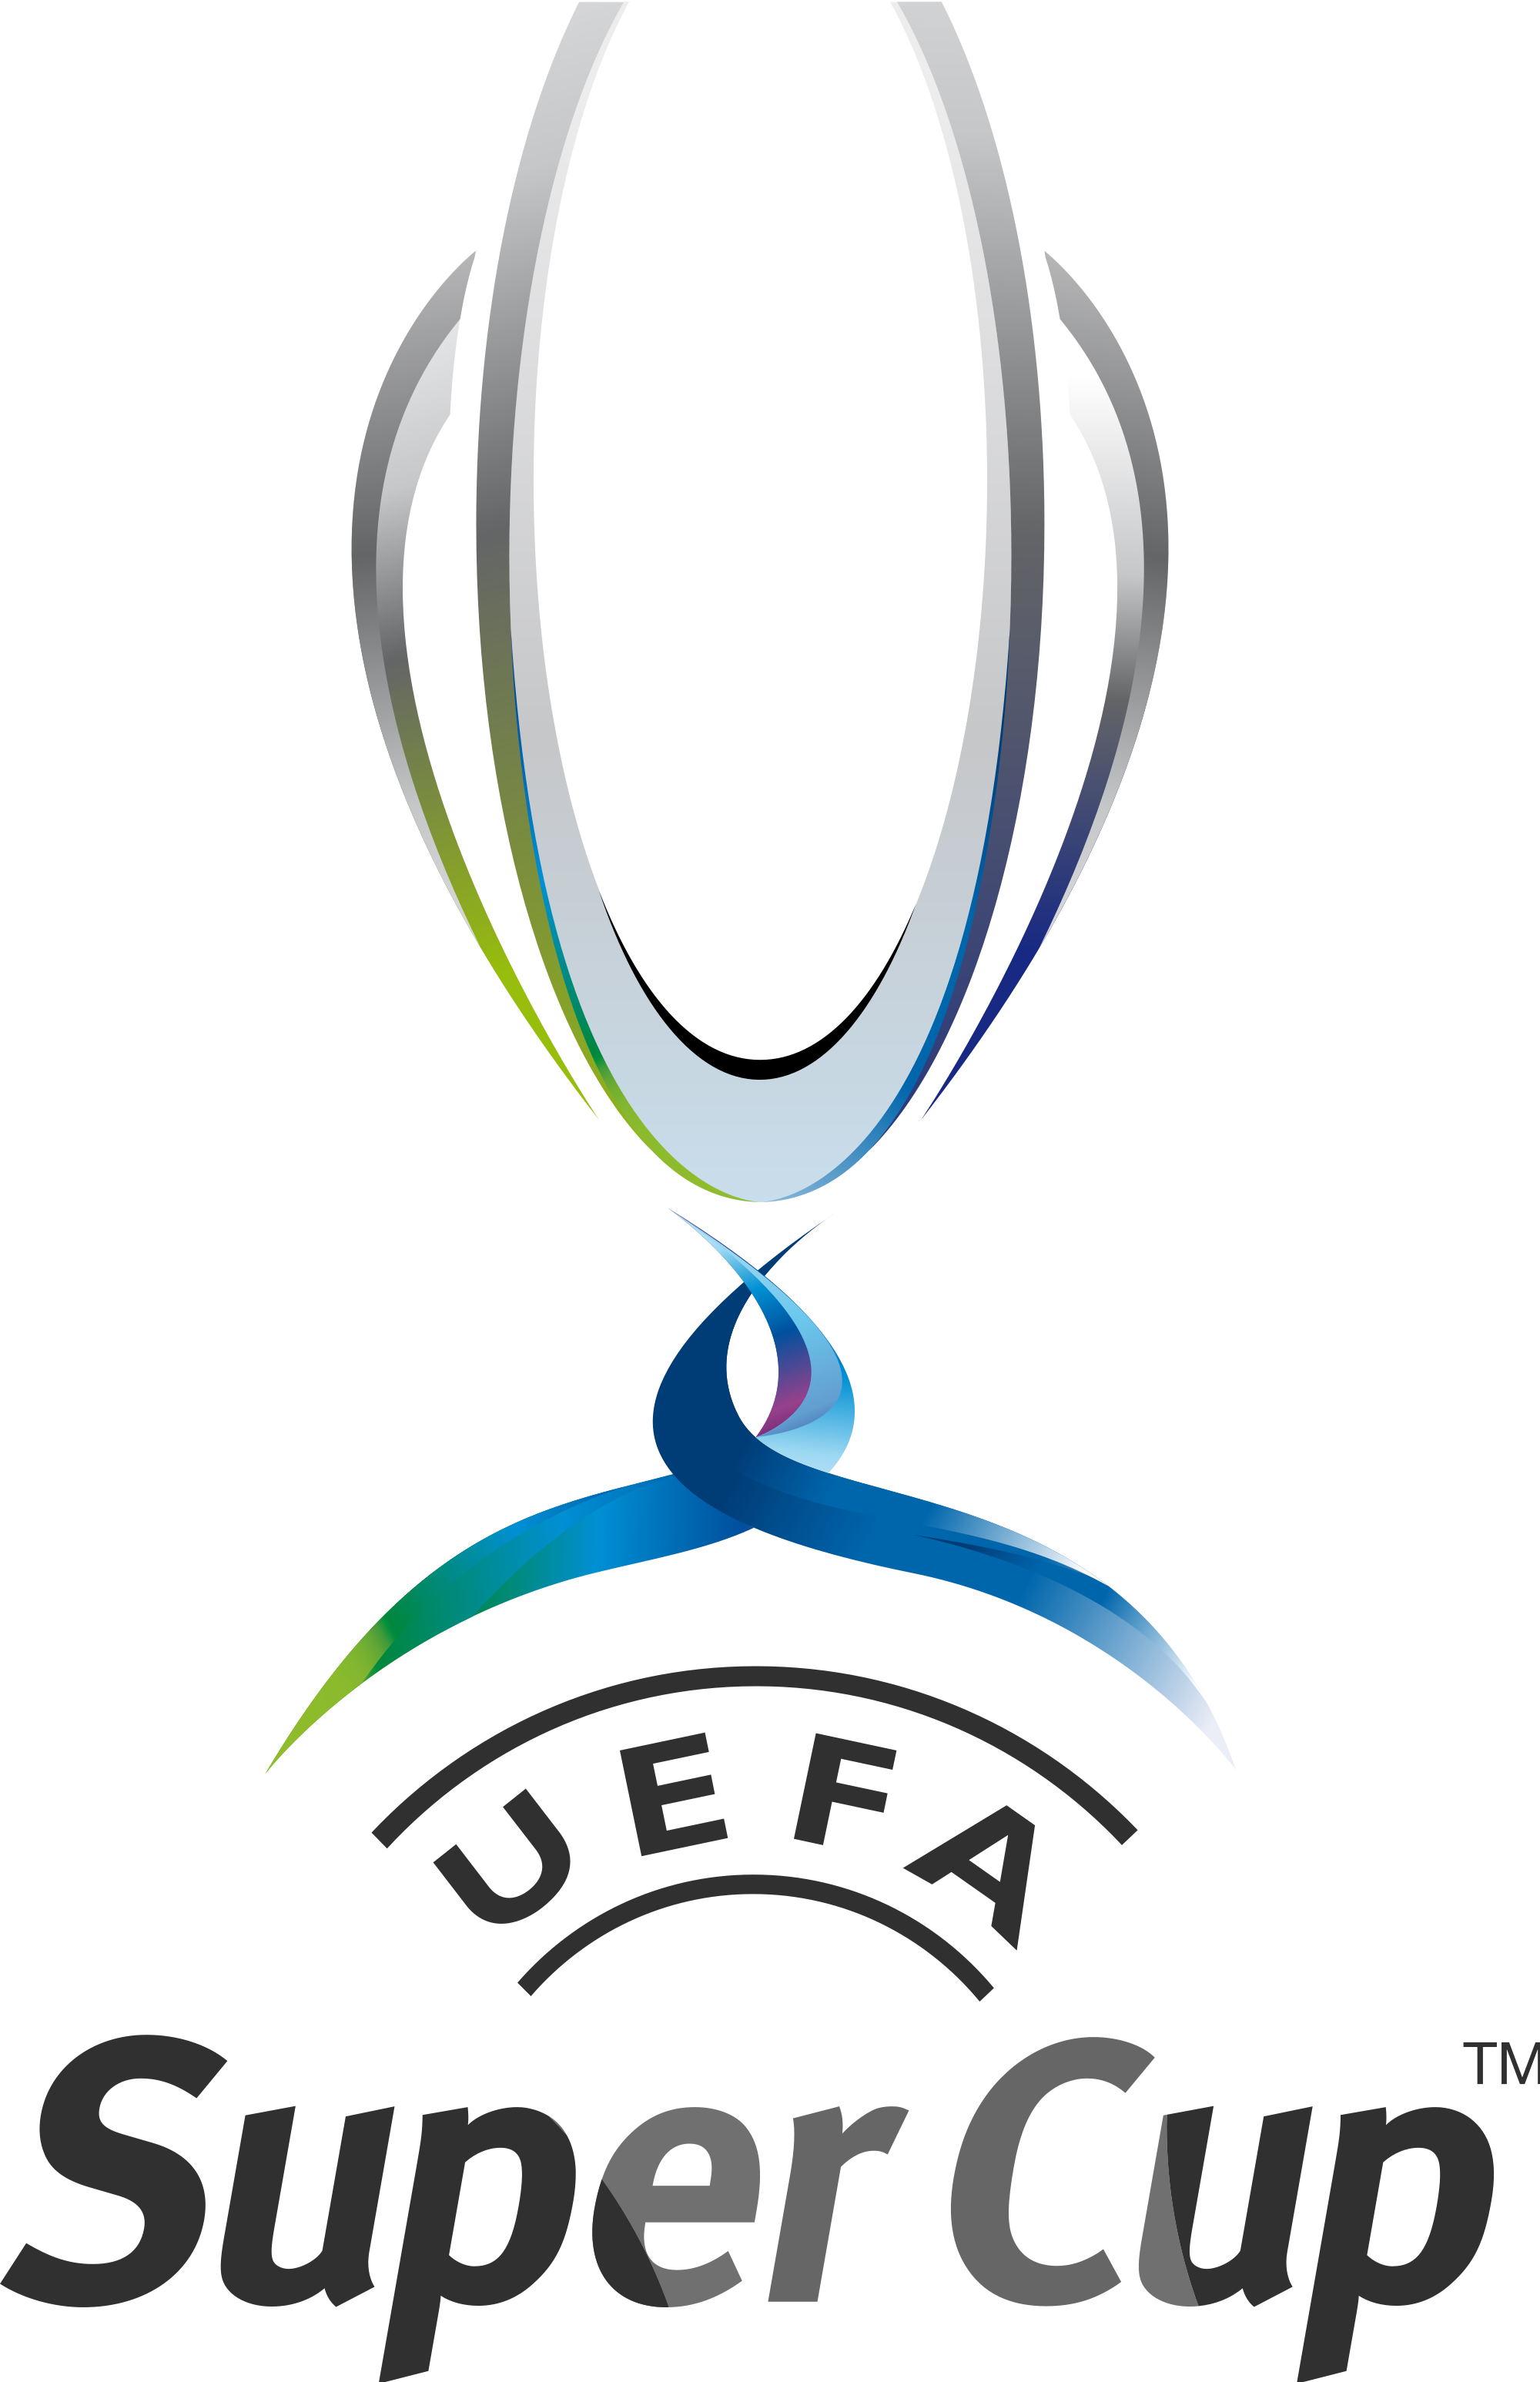 UEFA Super Cup | Logopedia | FANDOM powered by Wikia